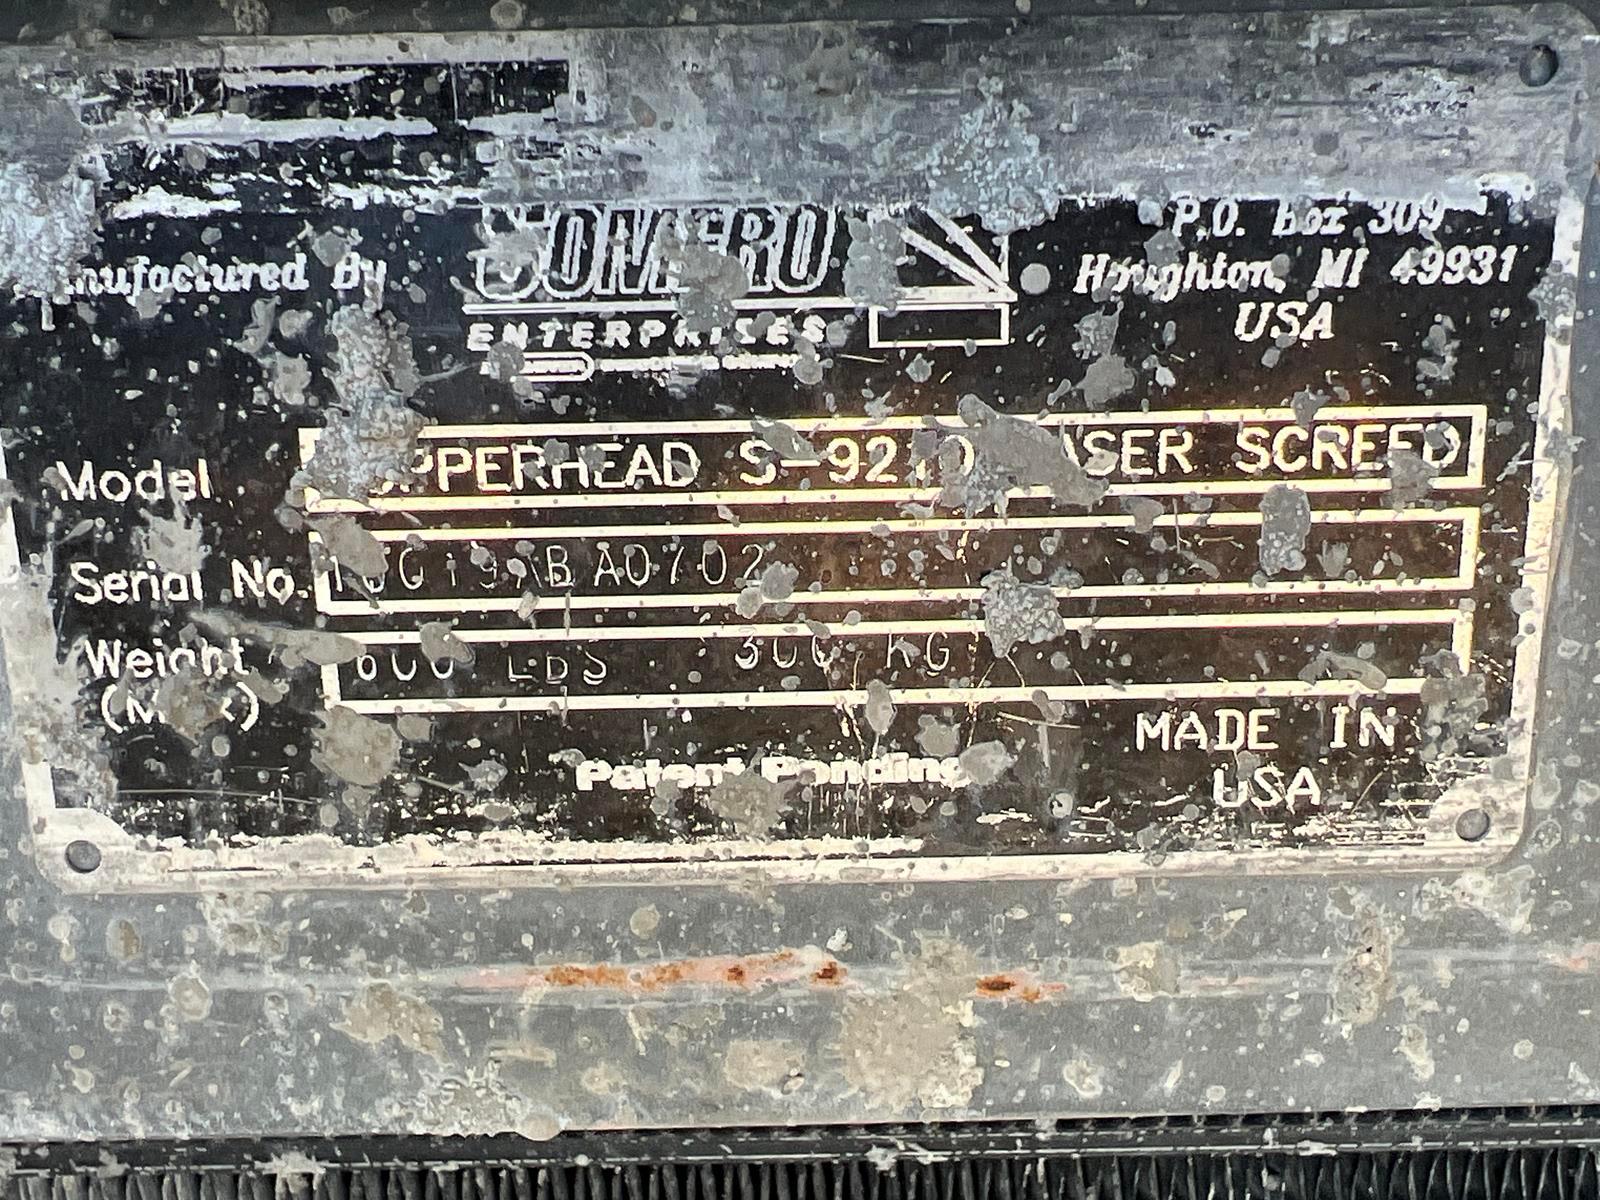 Copper Head S-9210 Laser Screed